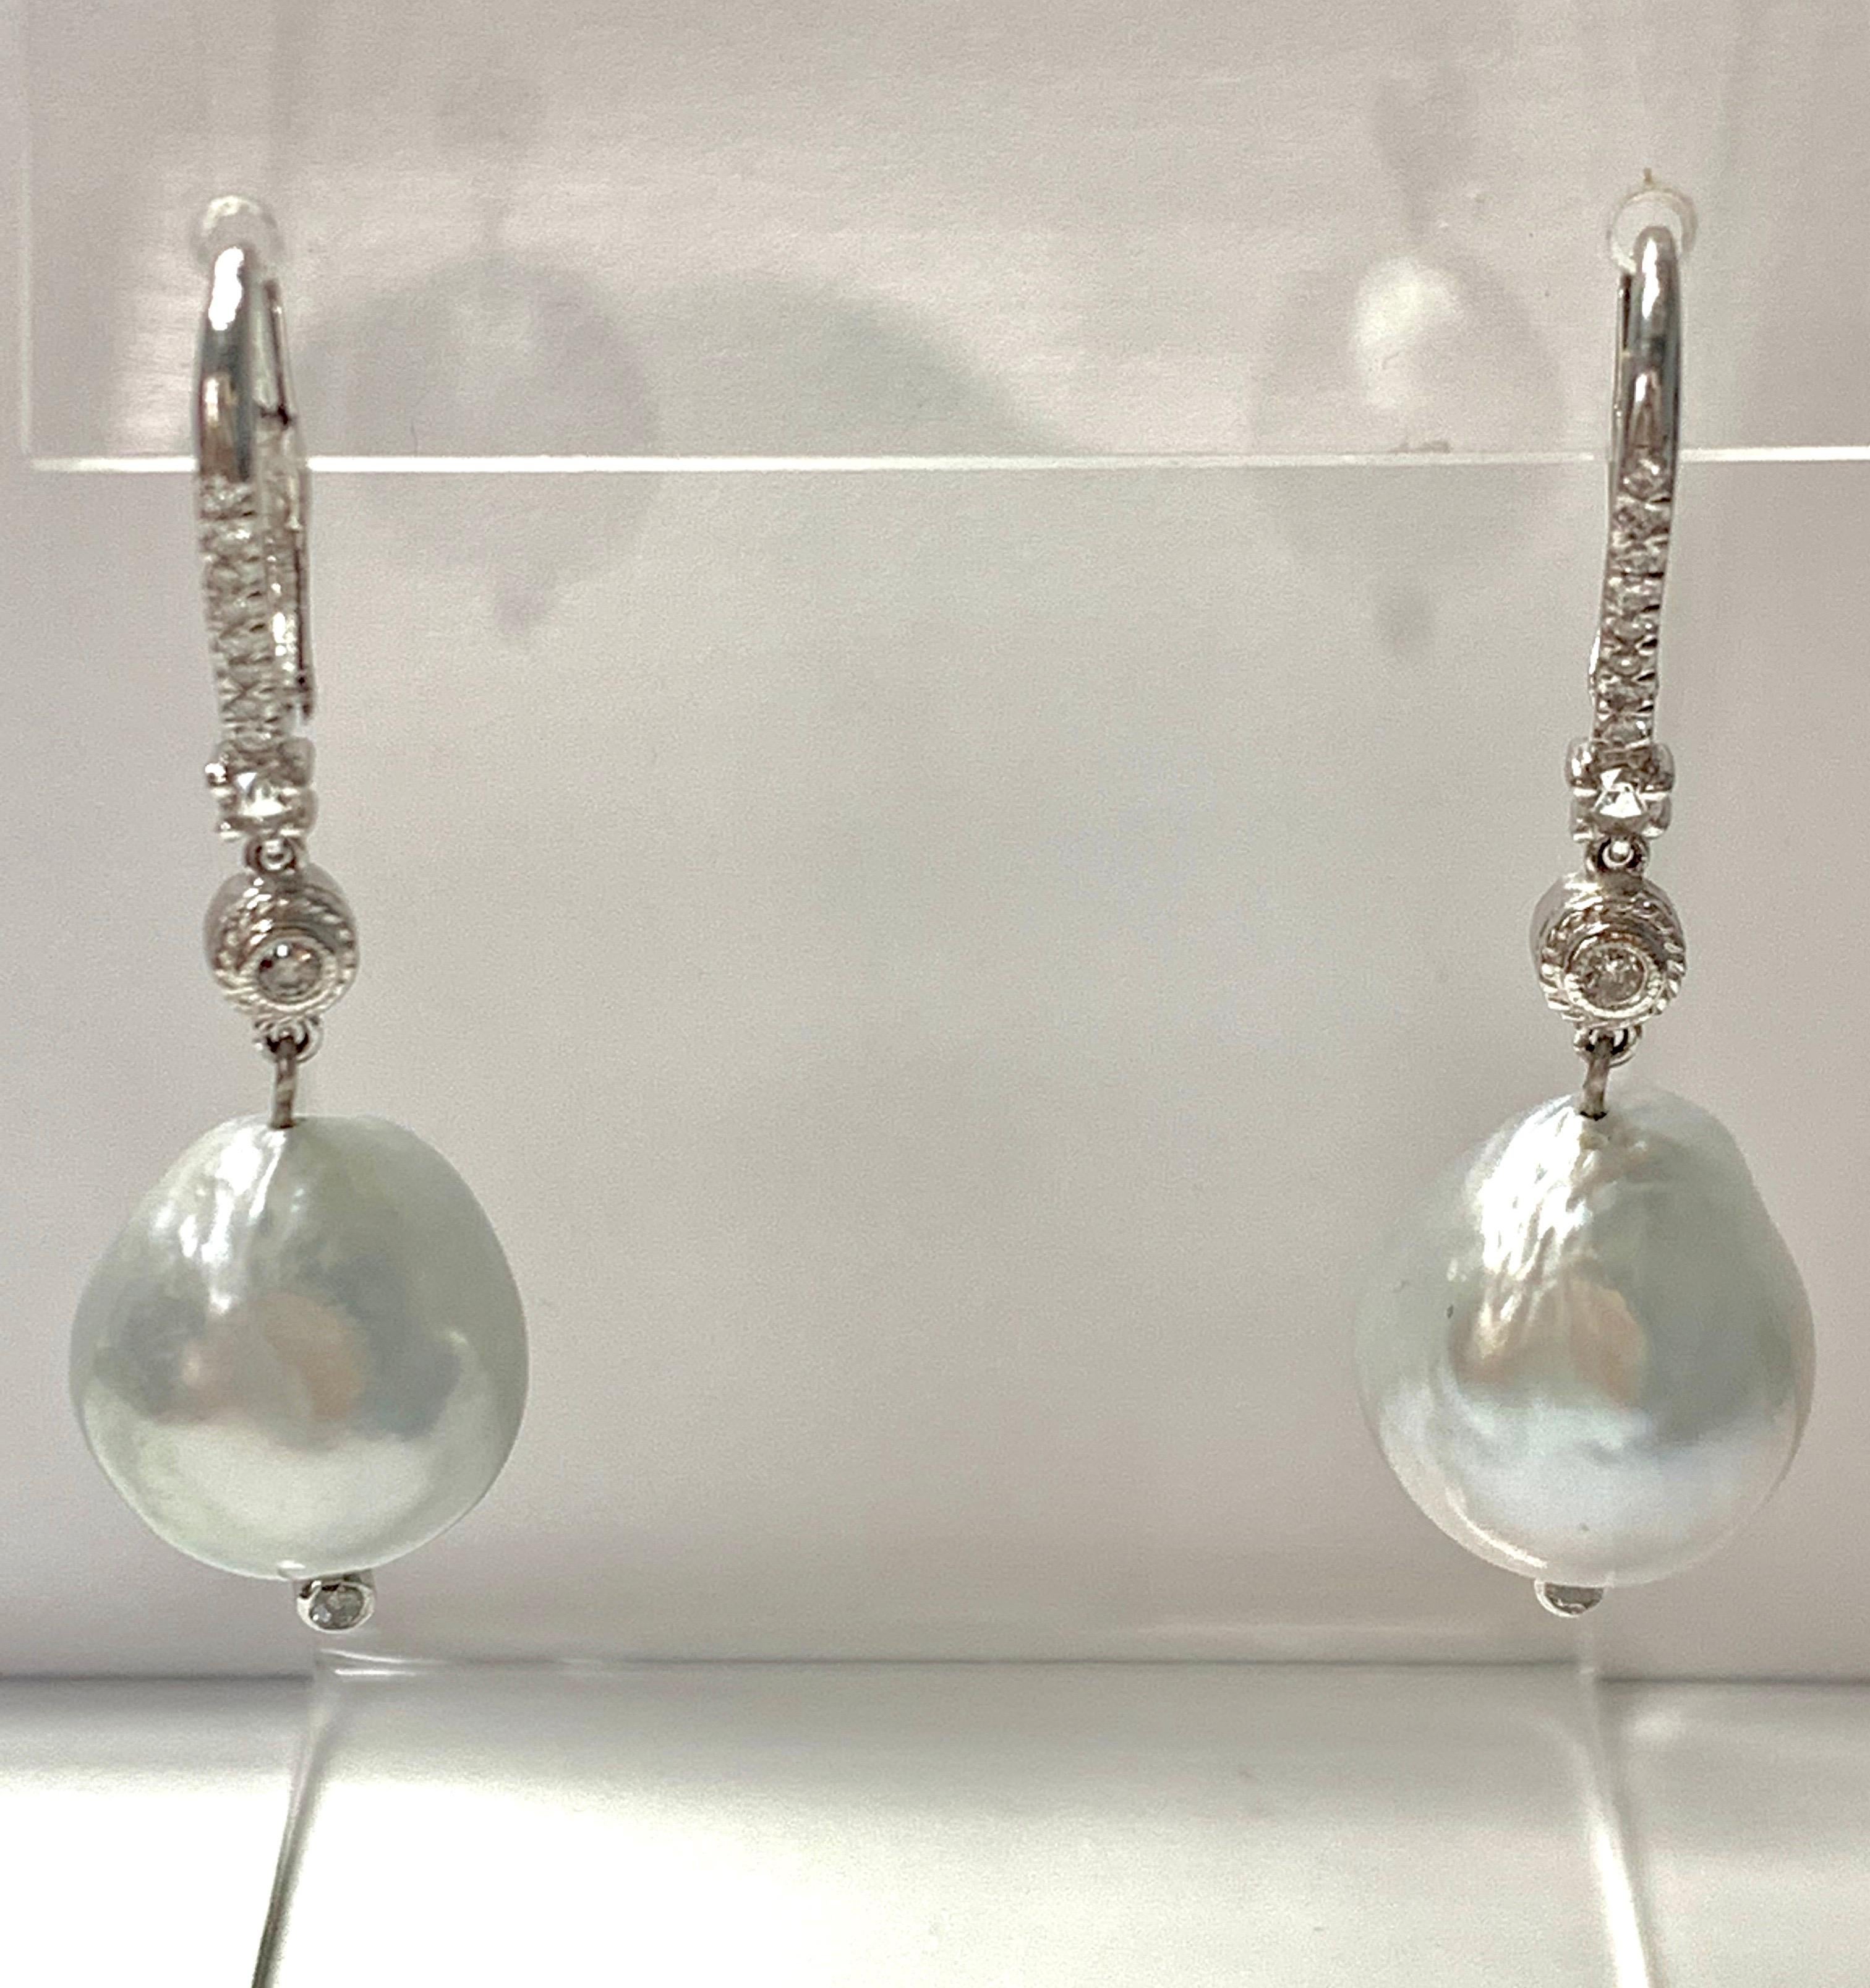 gold pearl and diamond drop earrings -china -b2b -forum -blog -wikipedia -.cn -.gov -alibaba